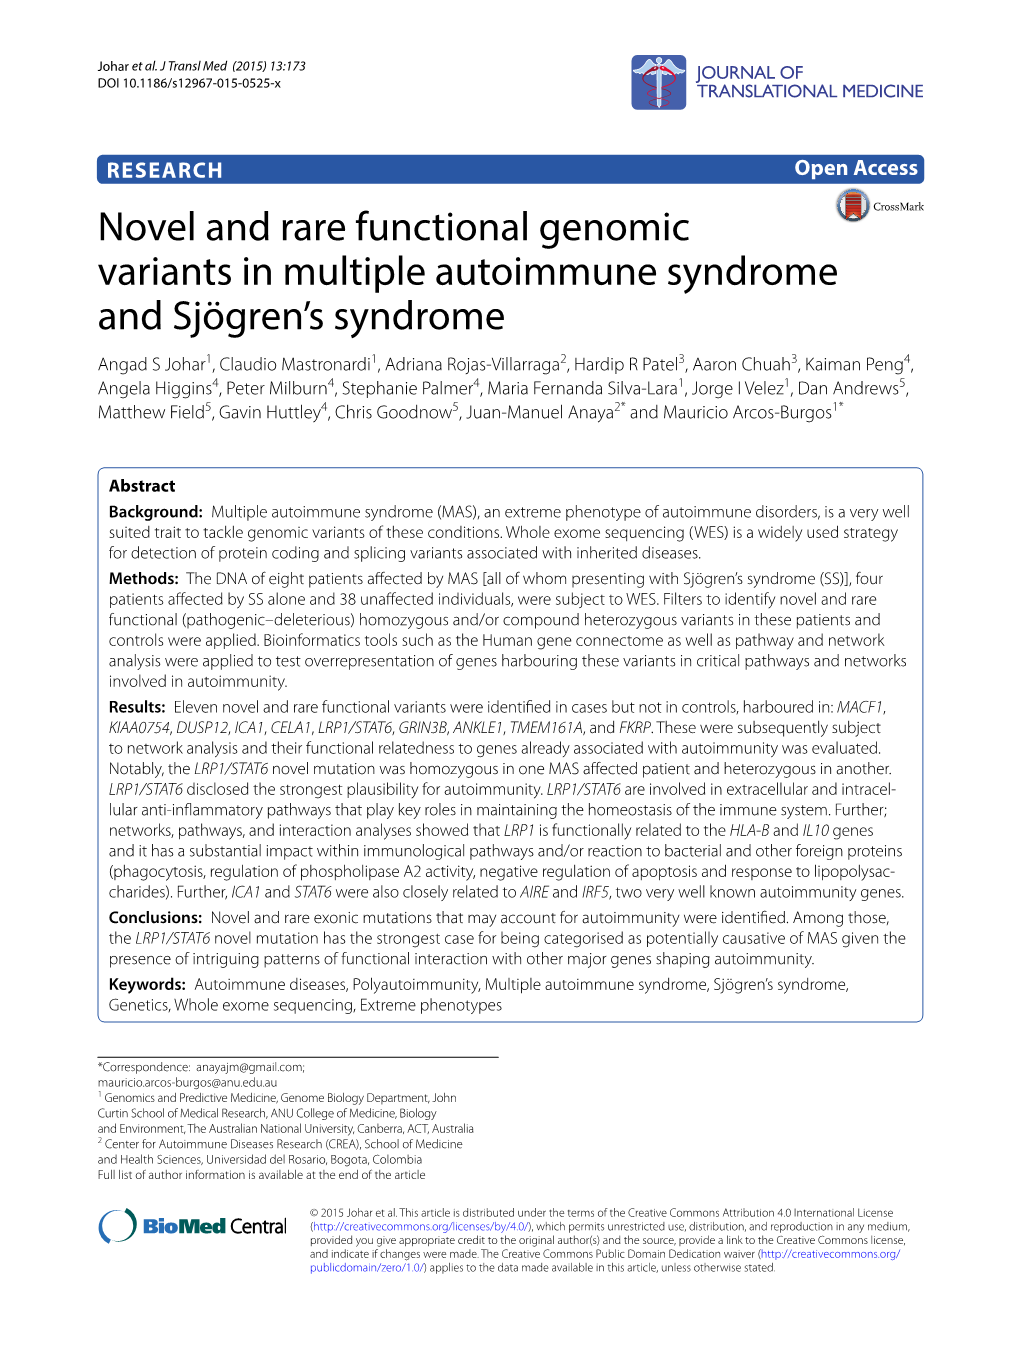 Novel and Rare Functional Genomic Variants in Multiple Autoimmune